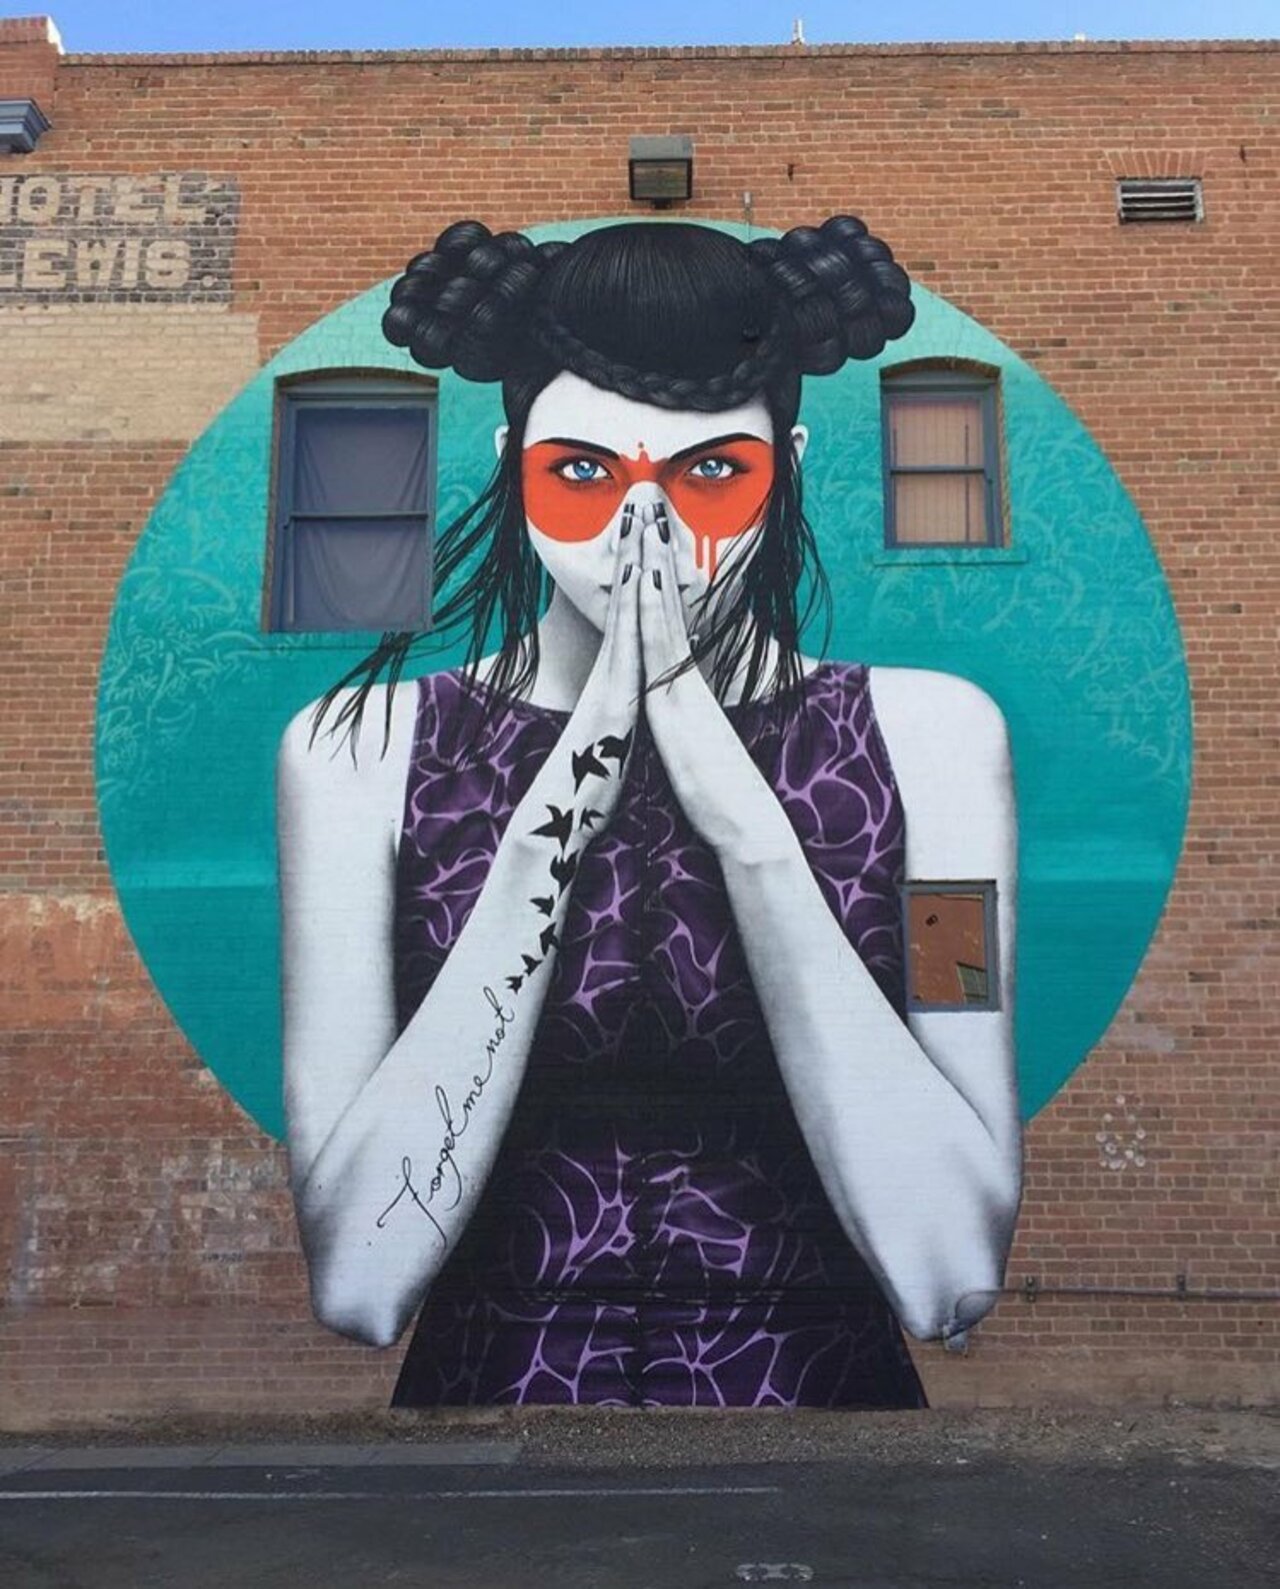 #mural by Findac #Tucson #USA #art #graffiti #streetart https://t.co/nlnO5wmSxS